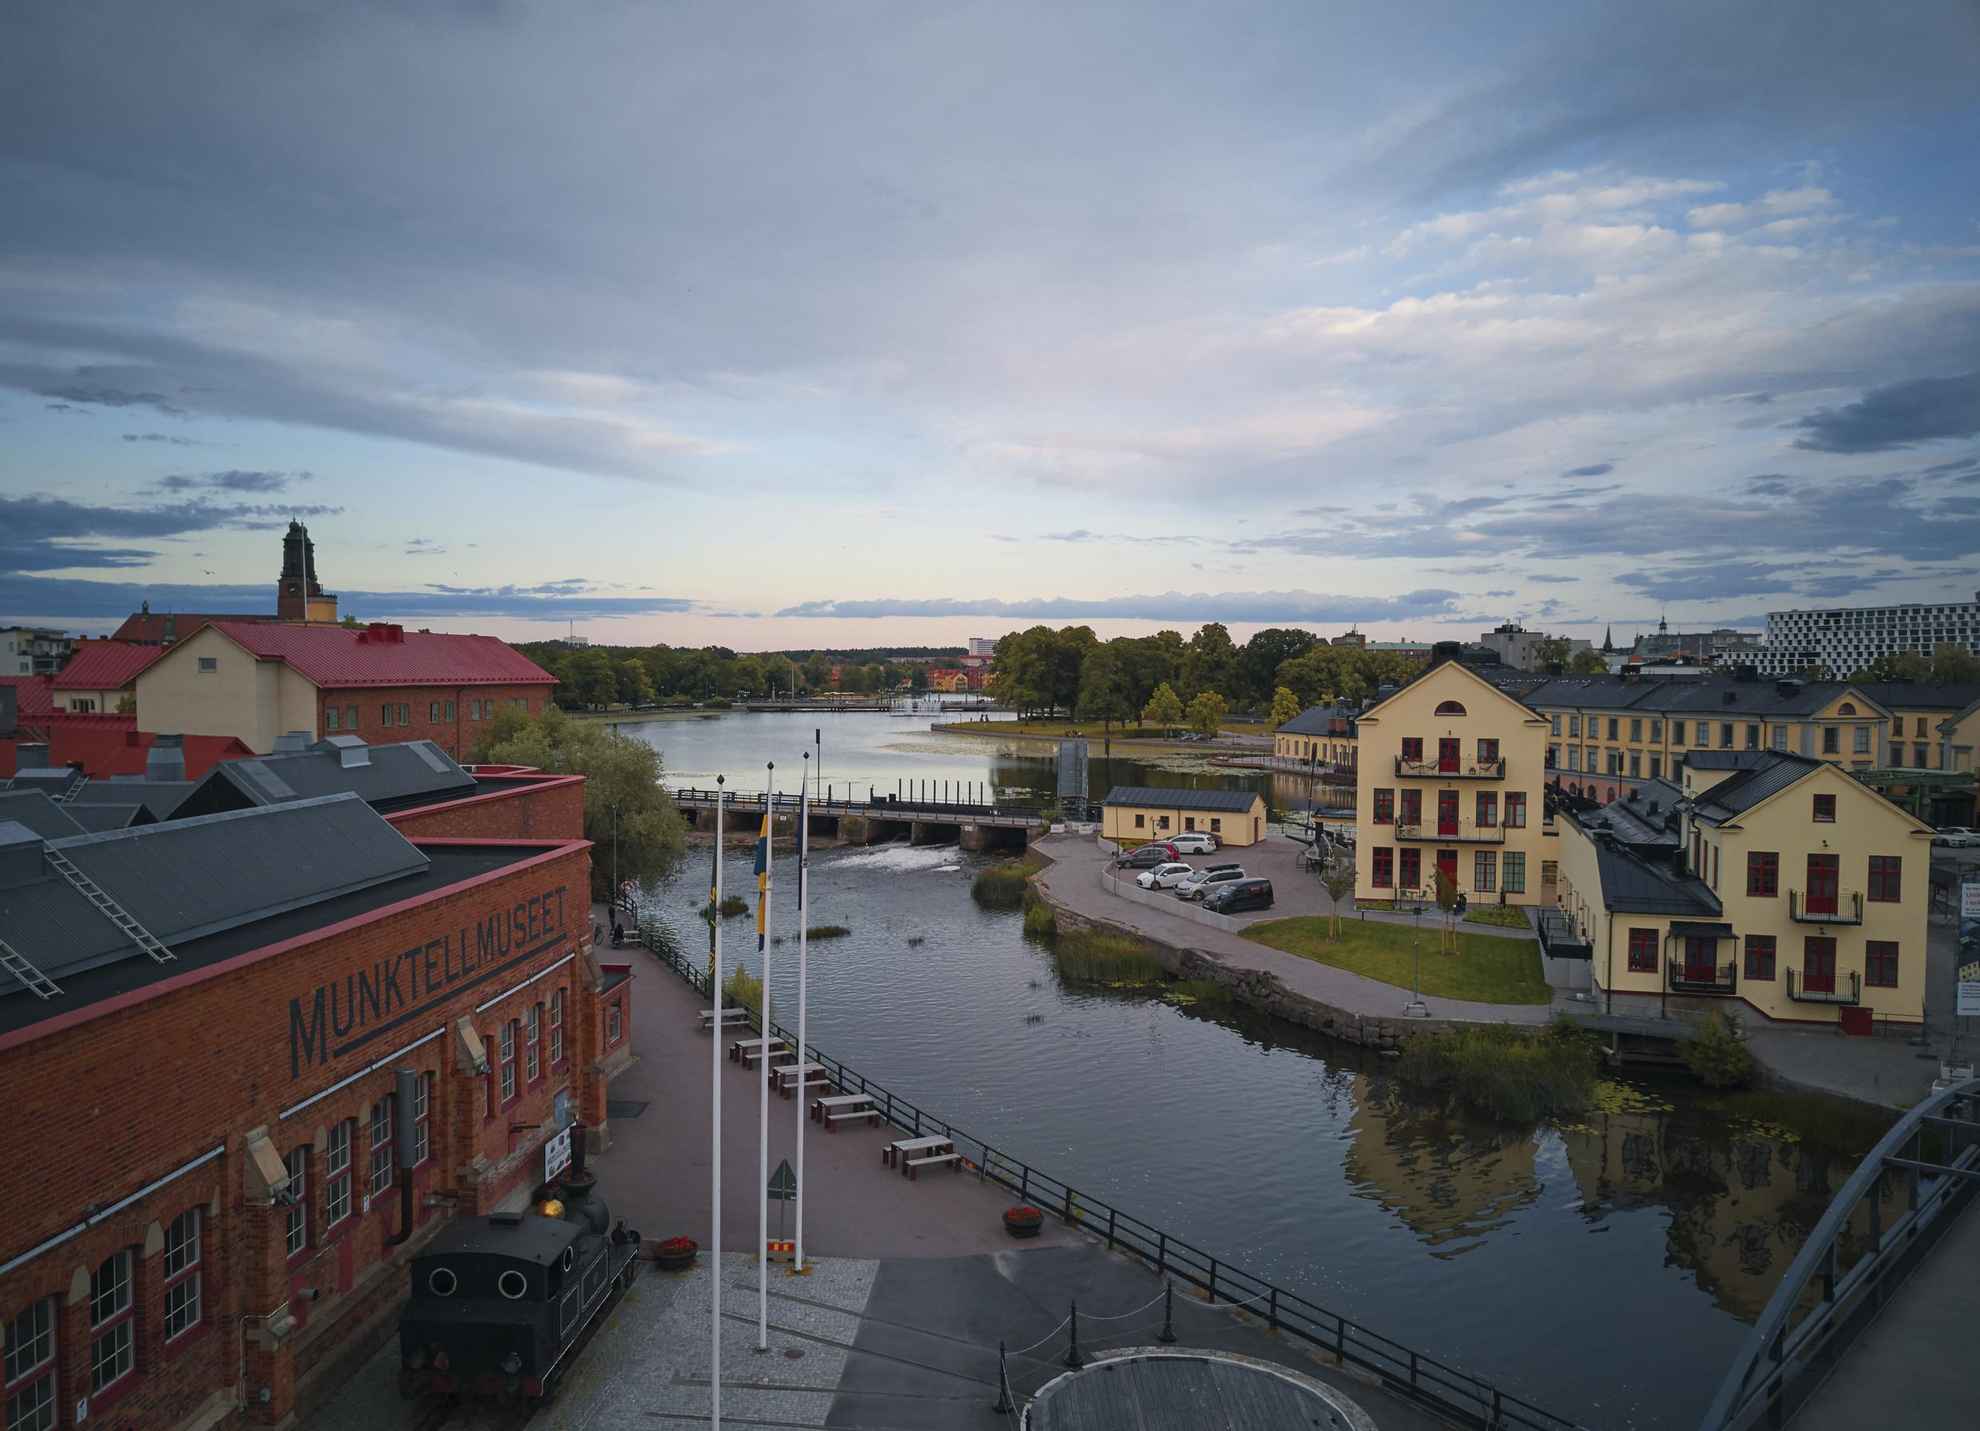 Munktellstaden in Eskilstuna